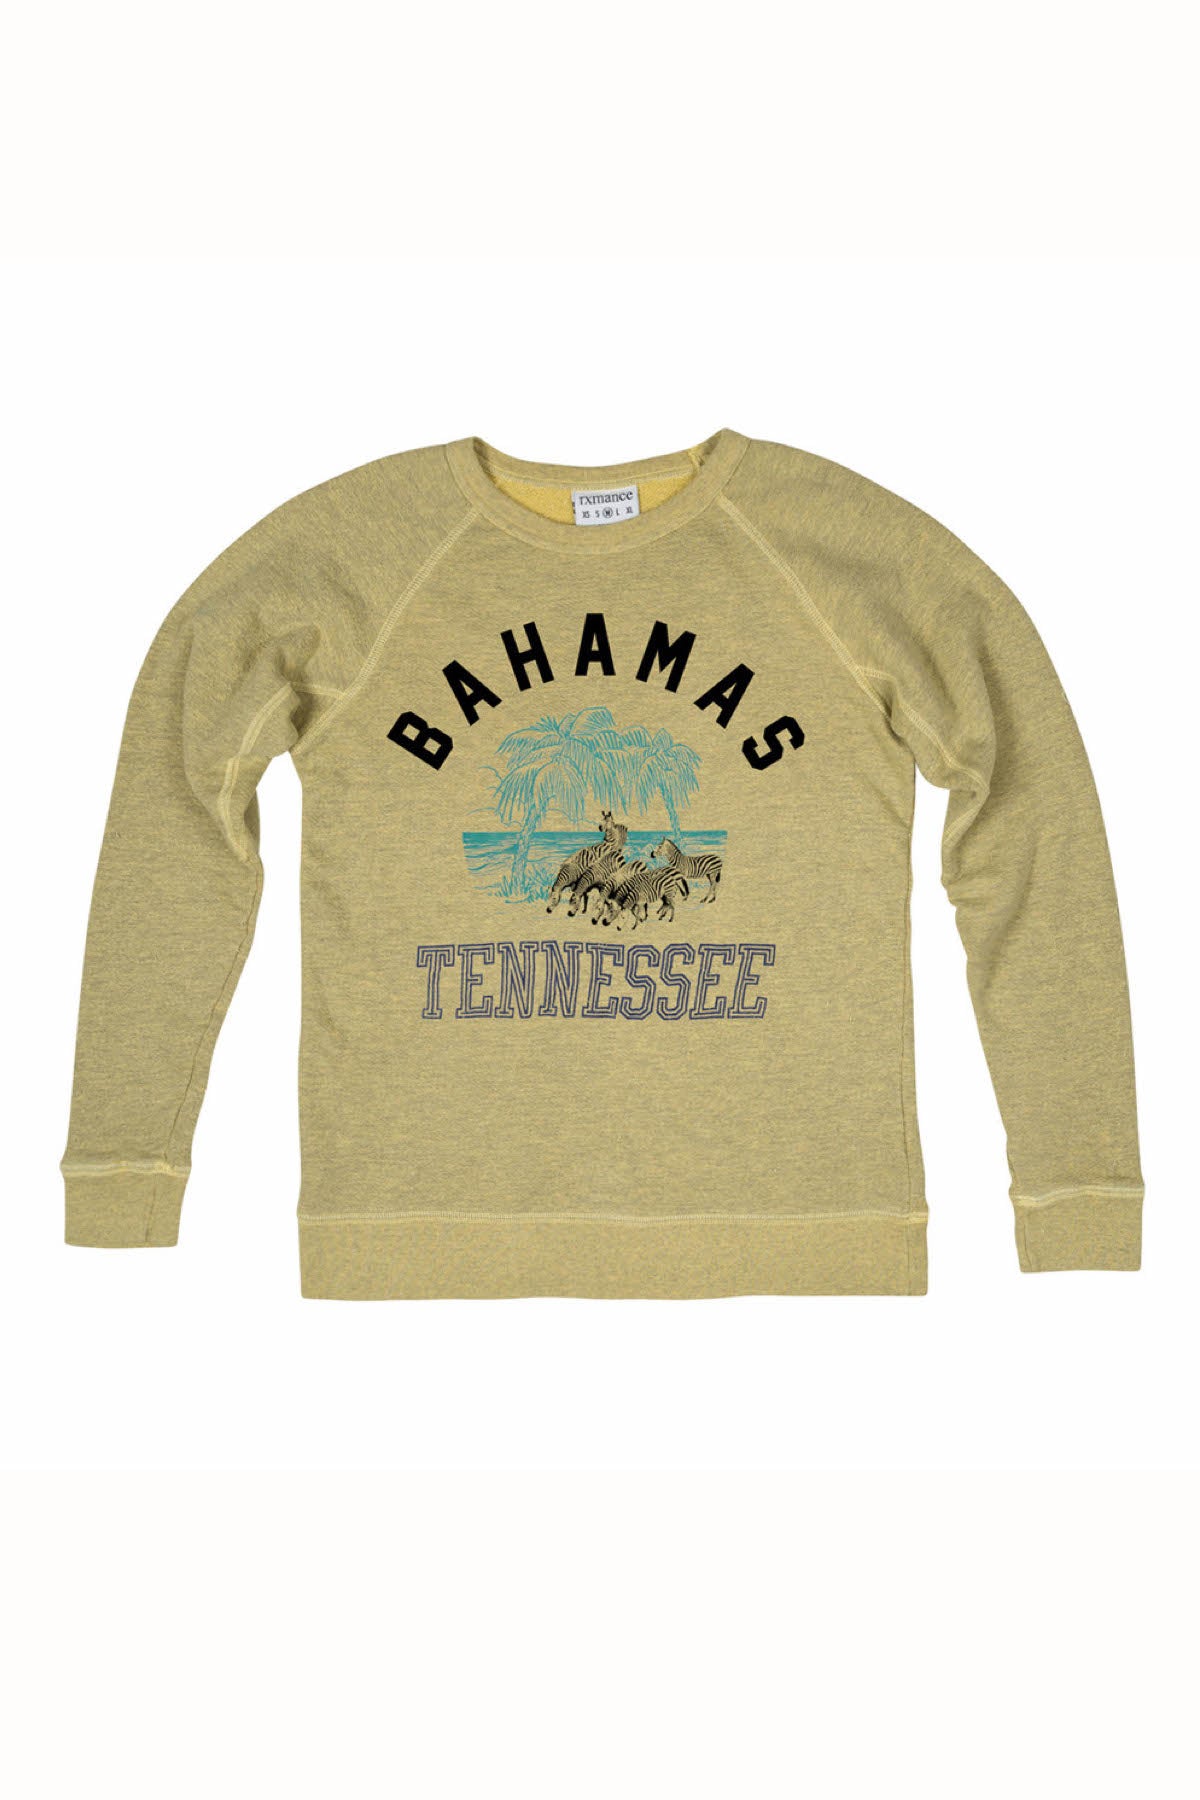 Rxmance Unisex Yellow Bahamas-Tennessee Sweatshirt